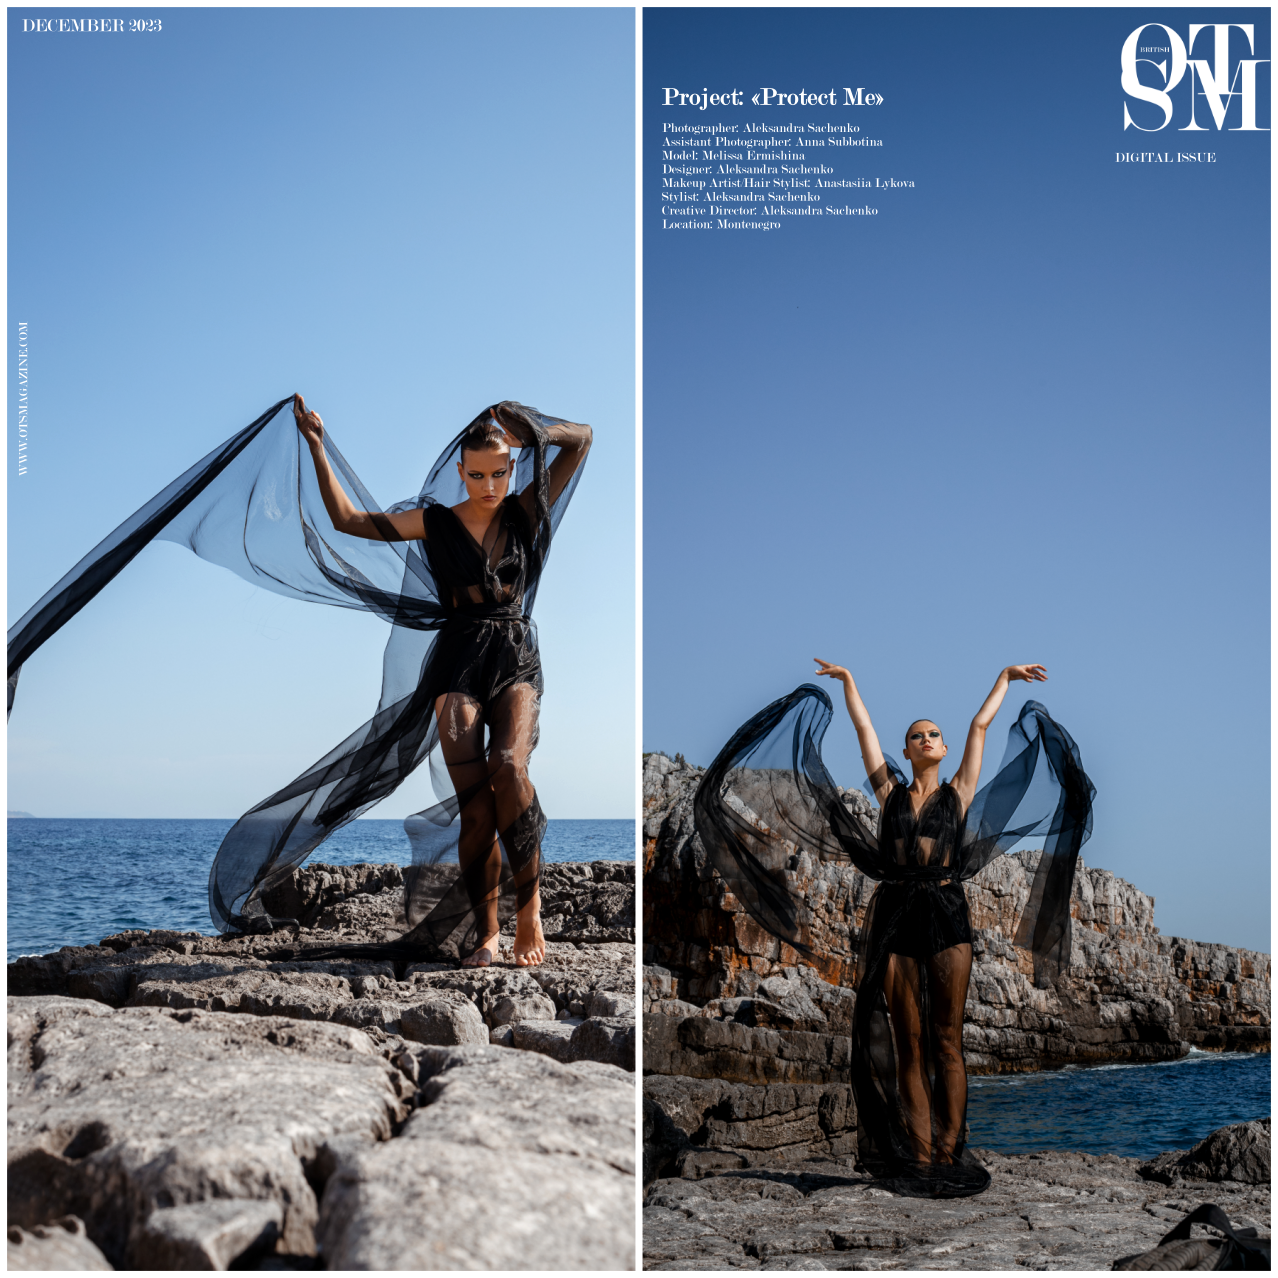 Project 'Protect Me' By Photographer Aleksandra Sachenko Featuring Model Melissa Ermishina.